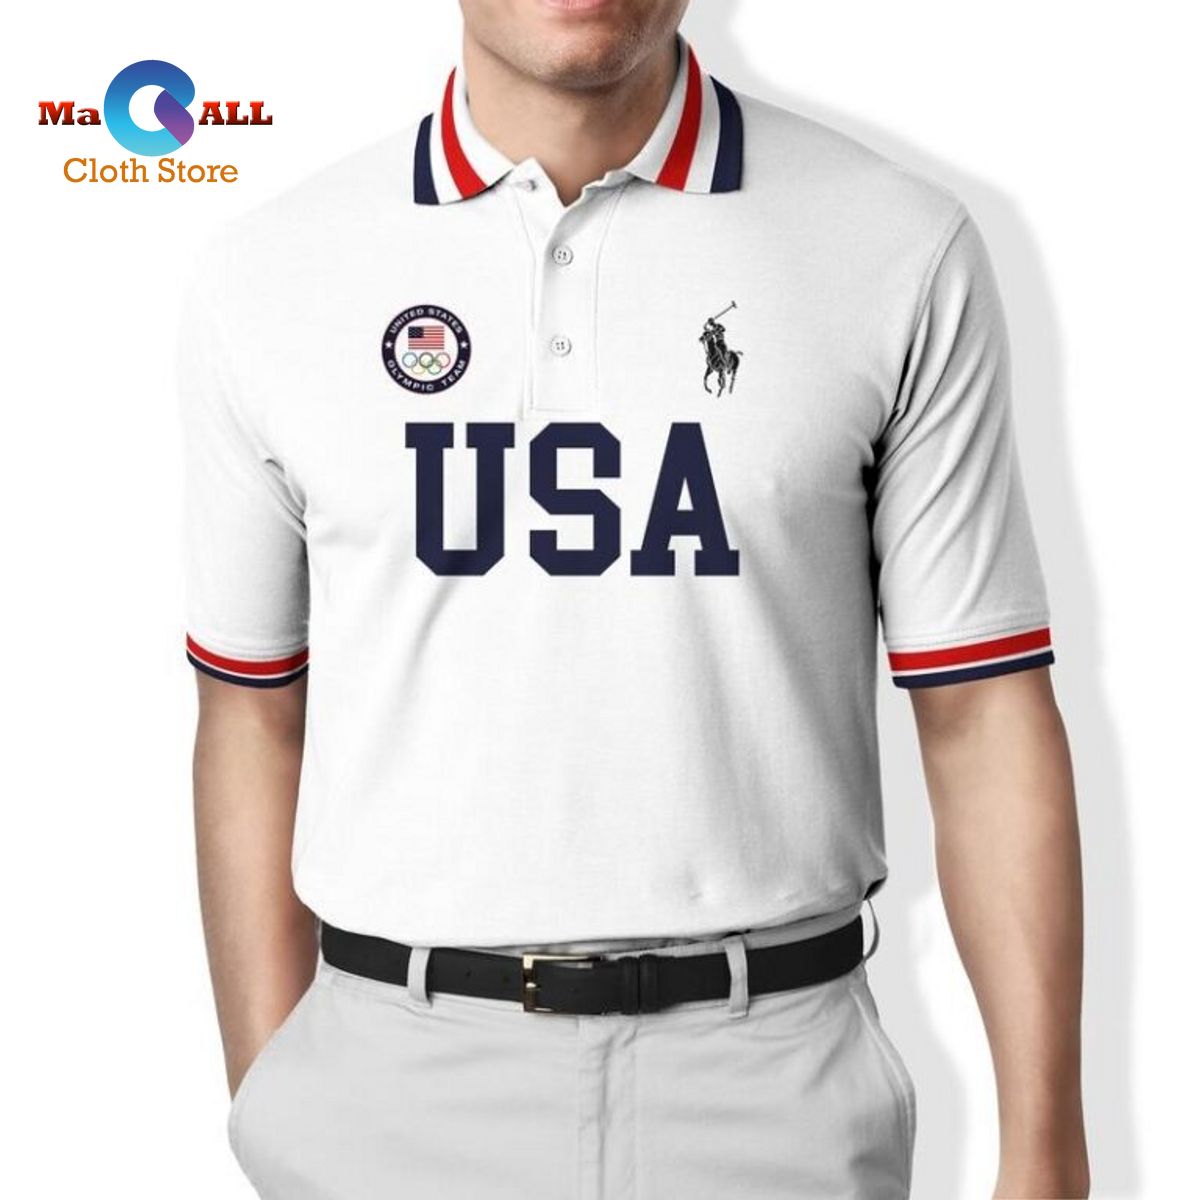 NEW] Ralph Lauren Team USA Stretch Mesh For Men RL Polo Shirt - Macall  Cloth Store - Destination for fashionistas